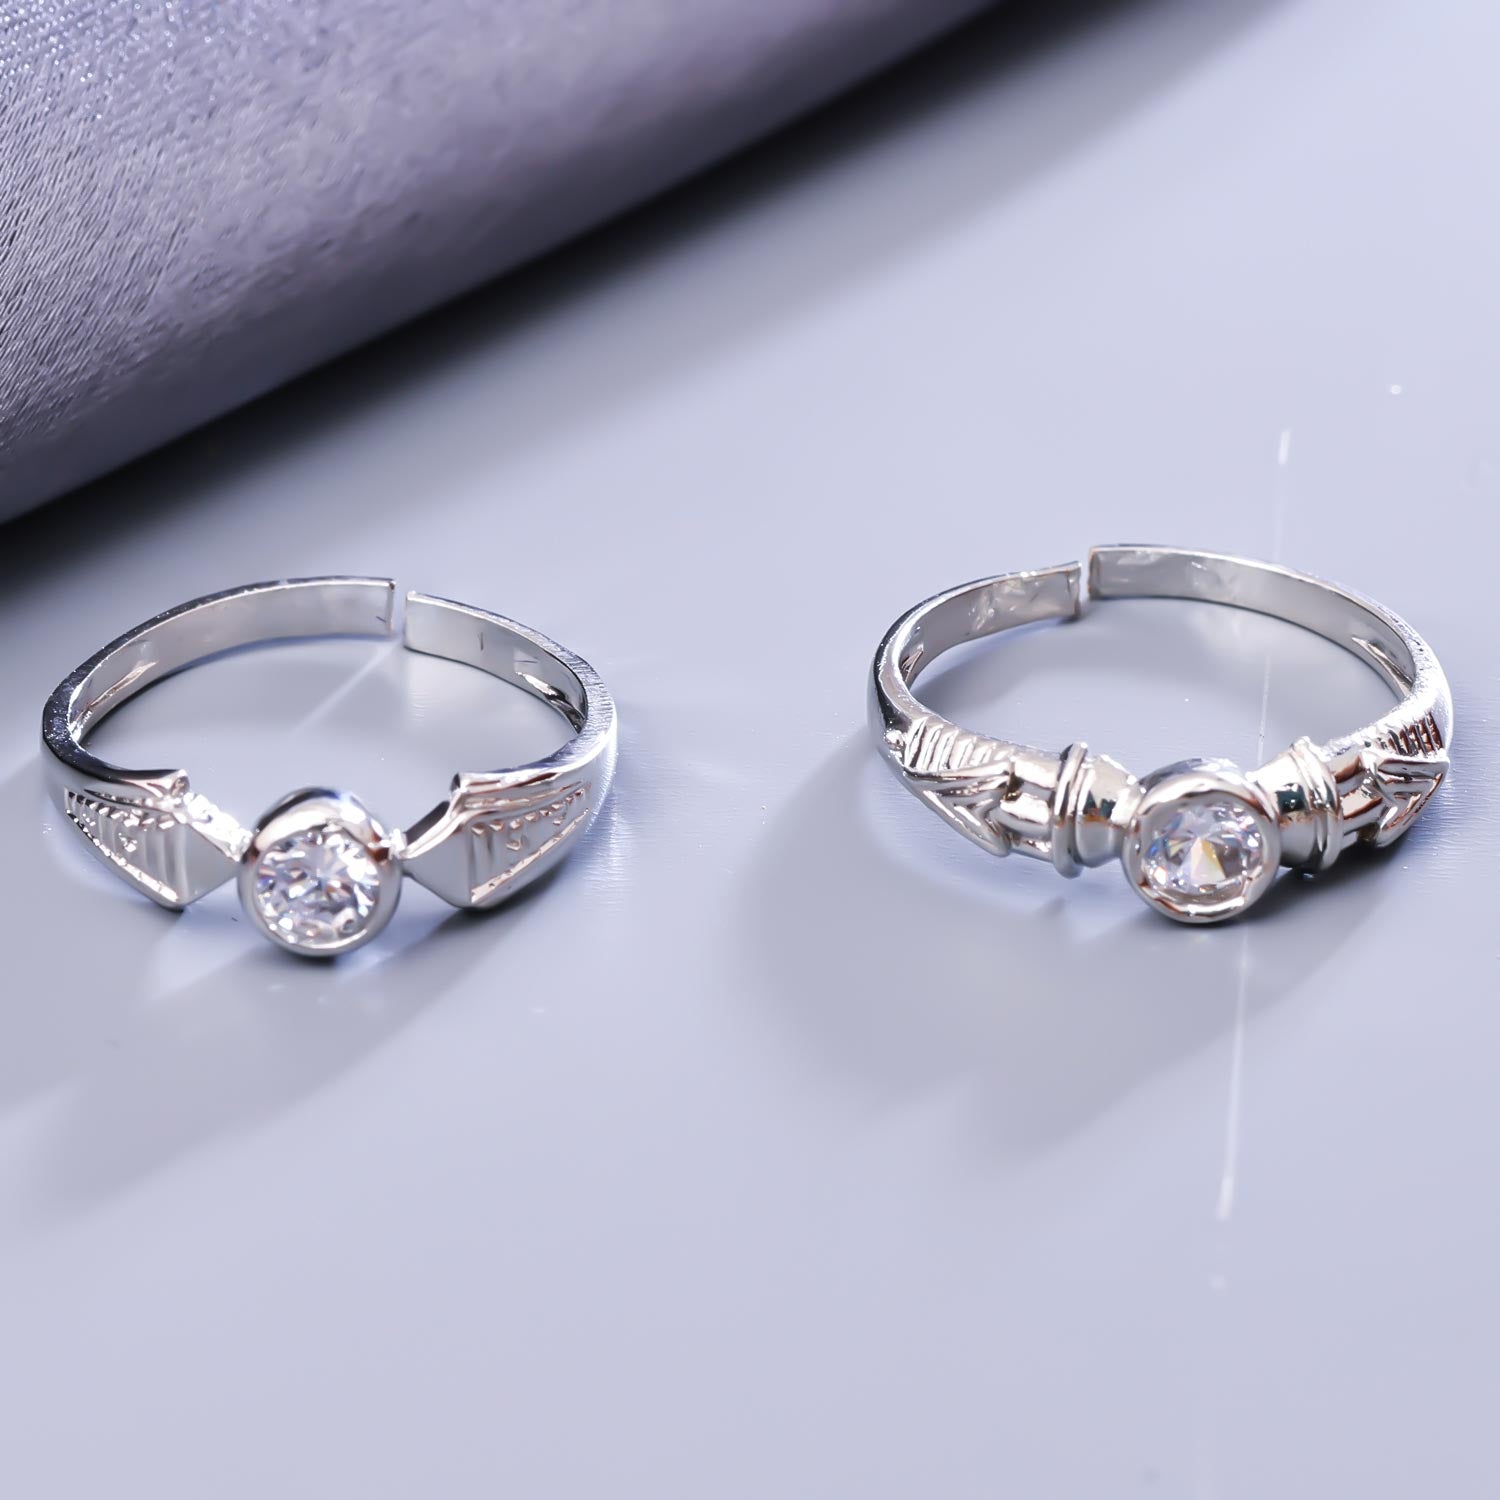 Sukkhi Glemaing Silver Rhodium Plated CZ Toe Ring for Women - Sukkhi.com